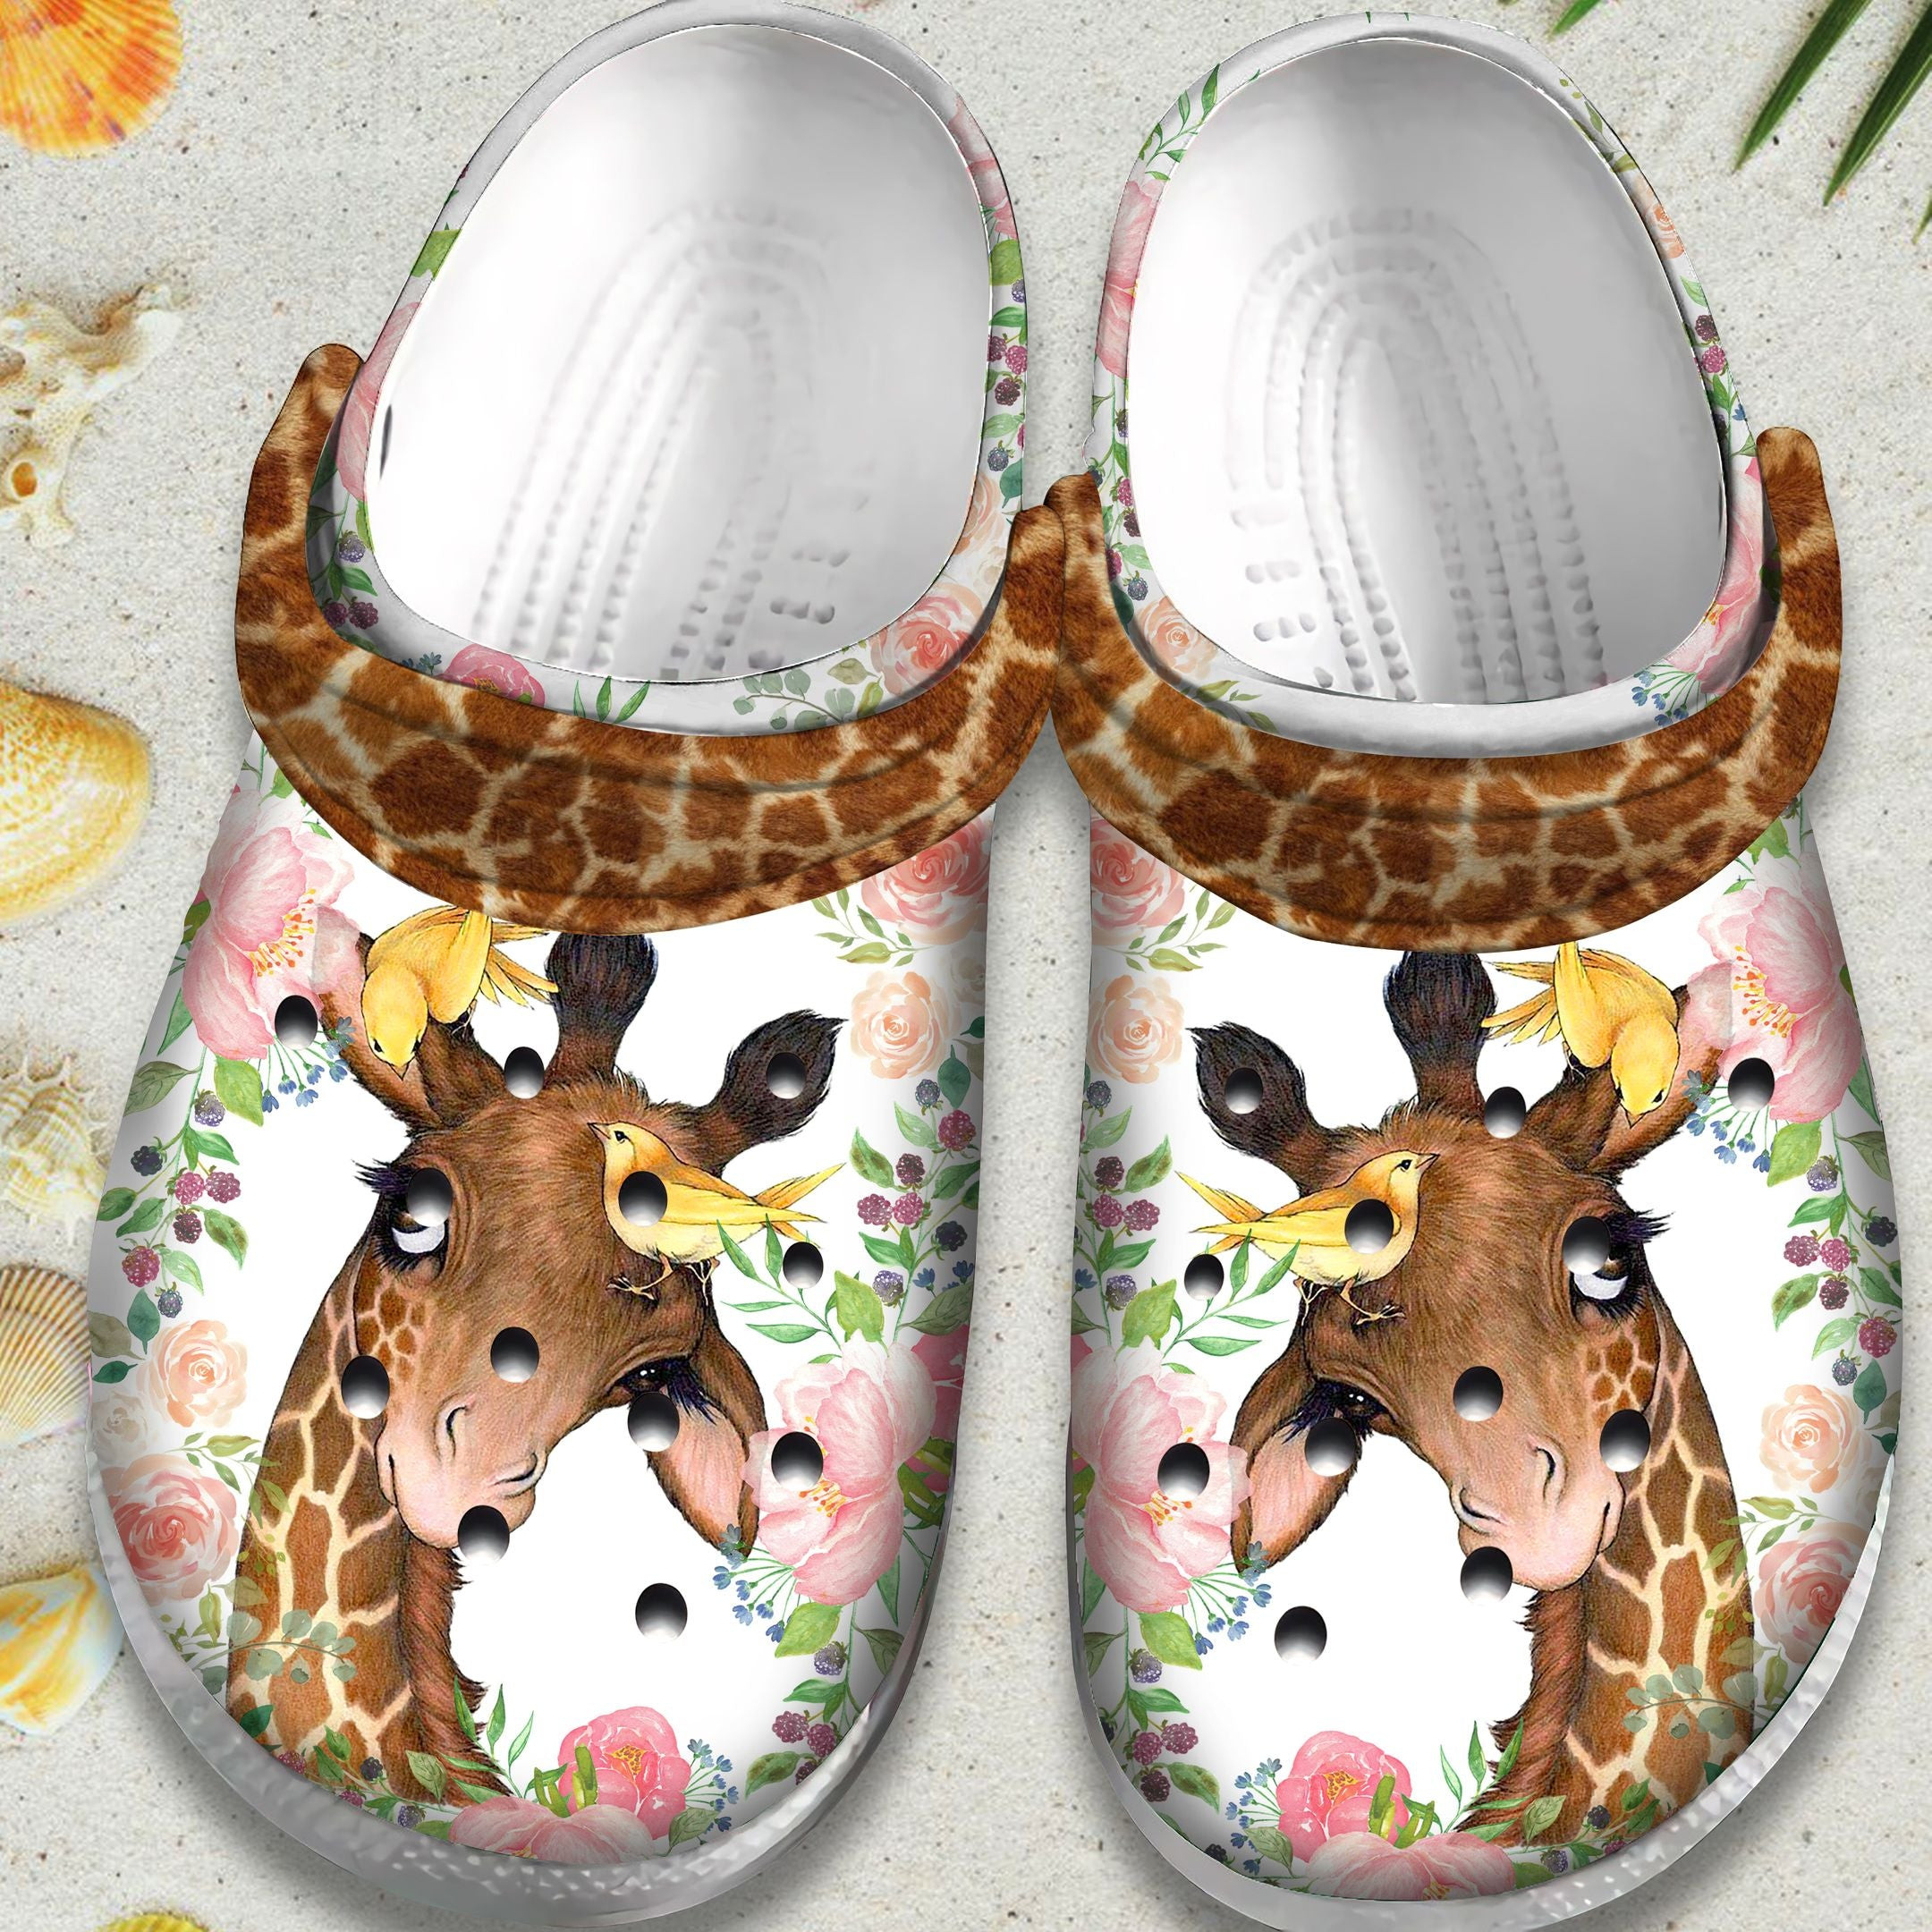 Flower Giraffe With Bird Shoes - Cute Animal Outdoor Shoes Birthday Gift For Men Women Boy Girl